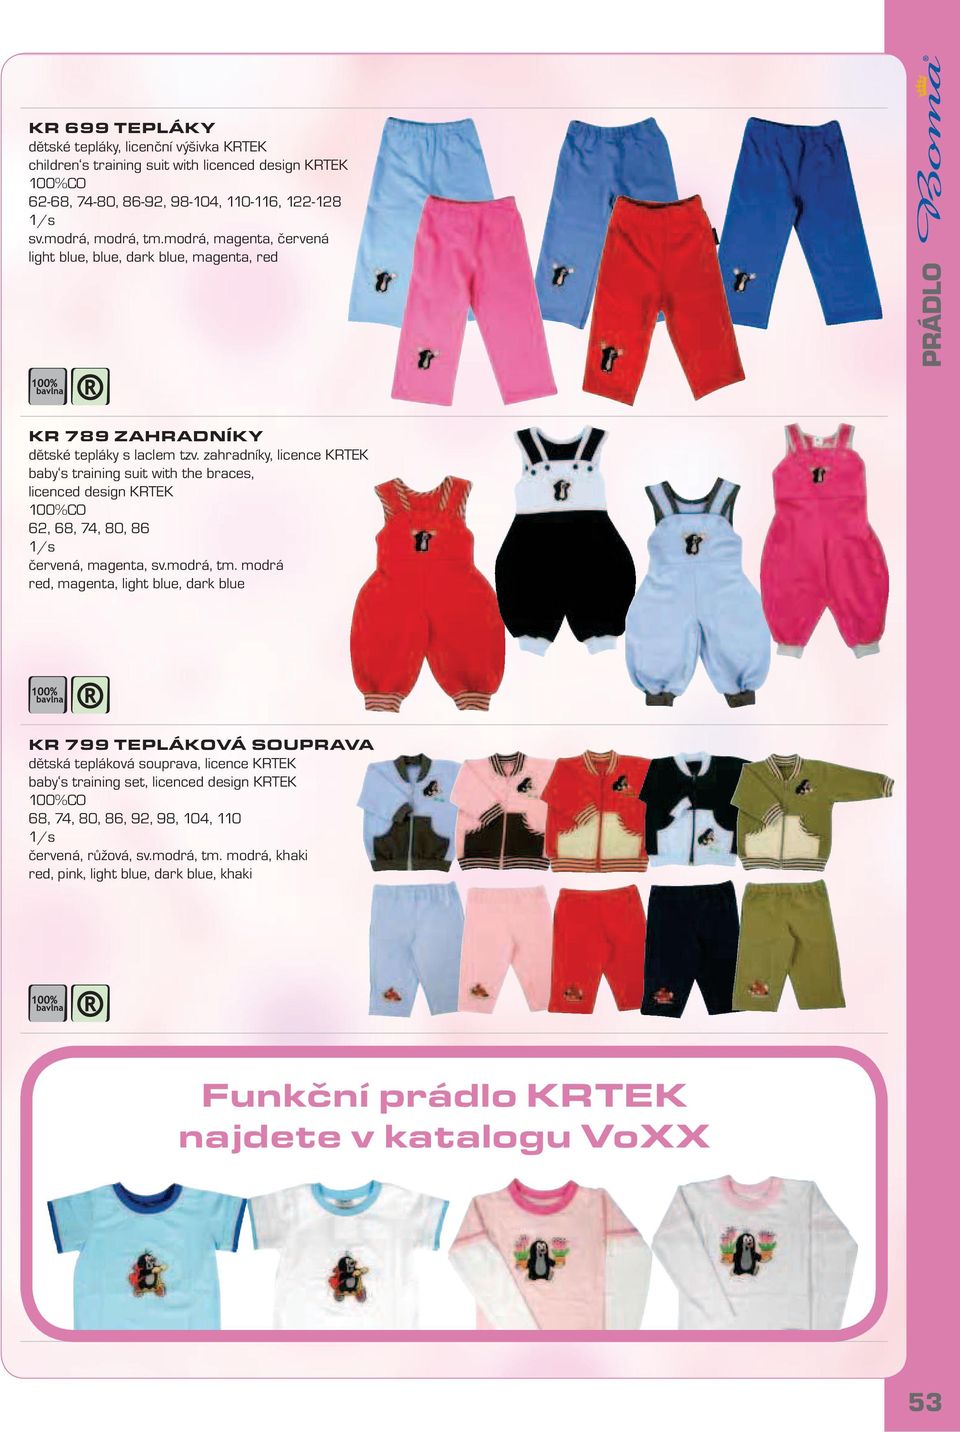 zahradníky, licence KRTEK baby s training suit with the braces, licenced design KRTEK 62, 68, 74, 80, 86 červená, magenta, sv.modrá, tm.